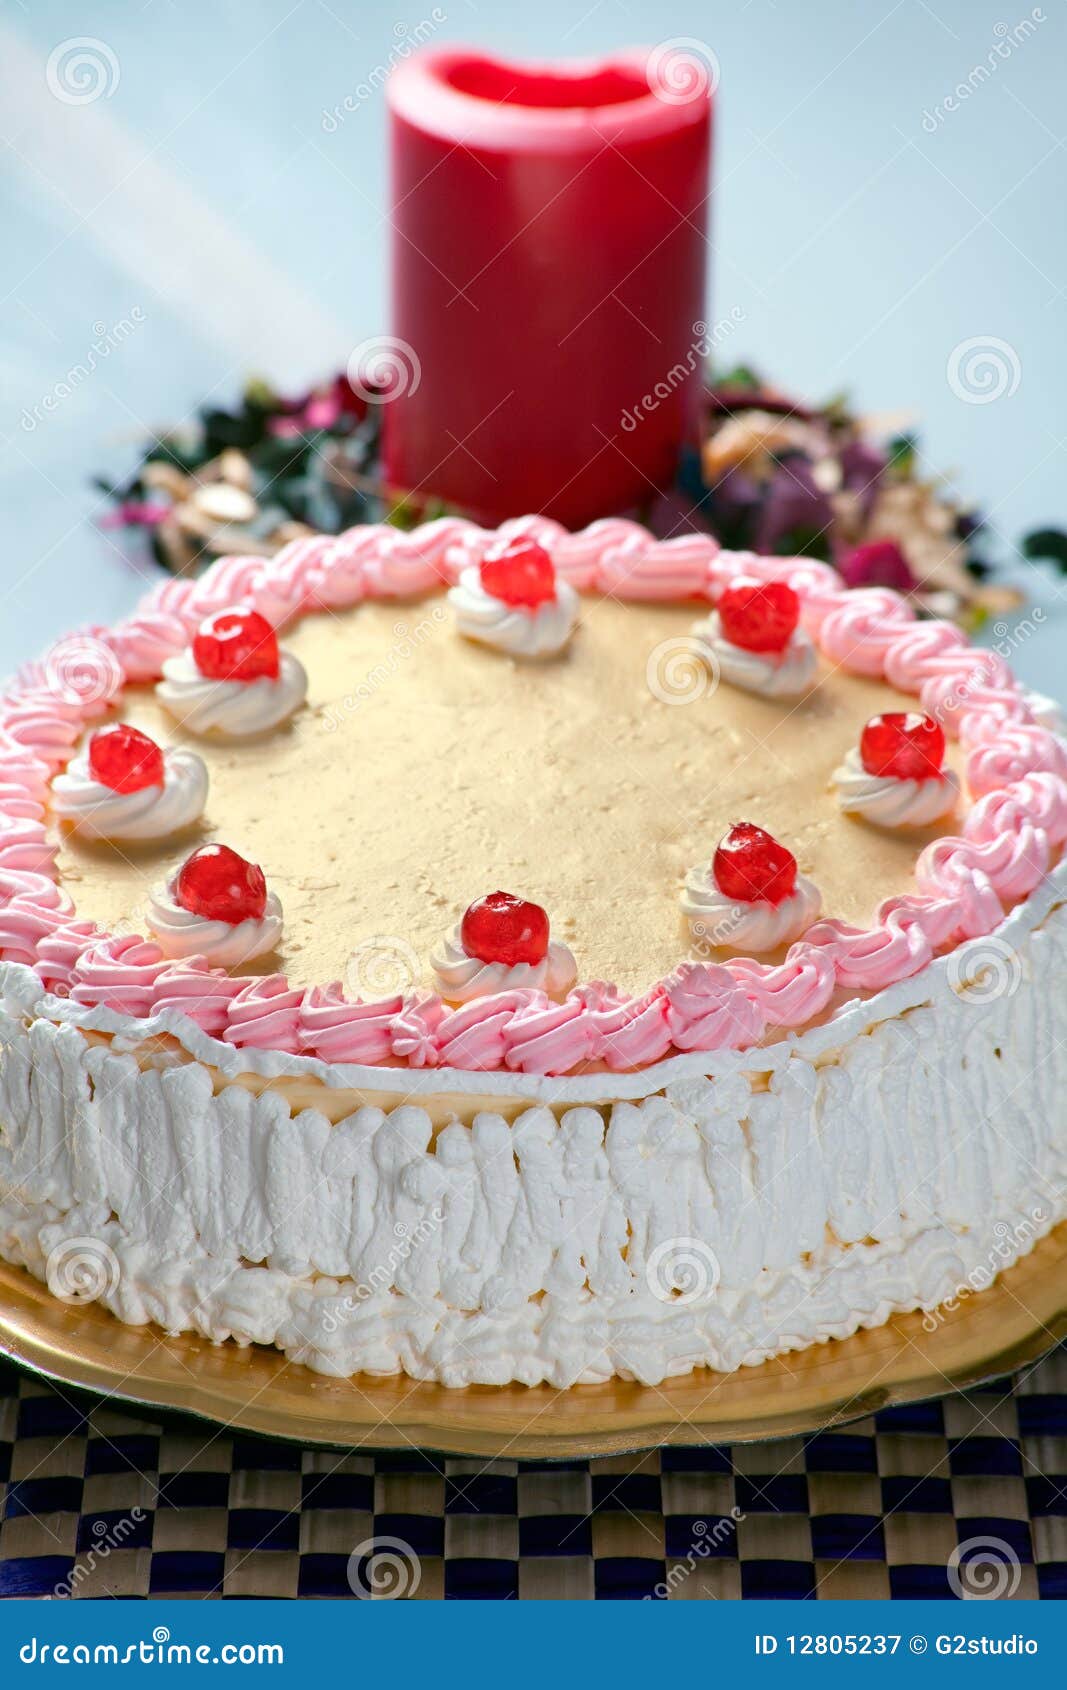 Birthday Strawberry and Cream Cake Stock Image - Image of cream ...